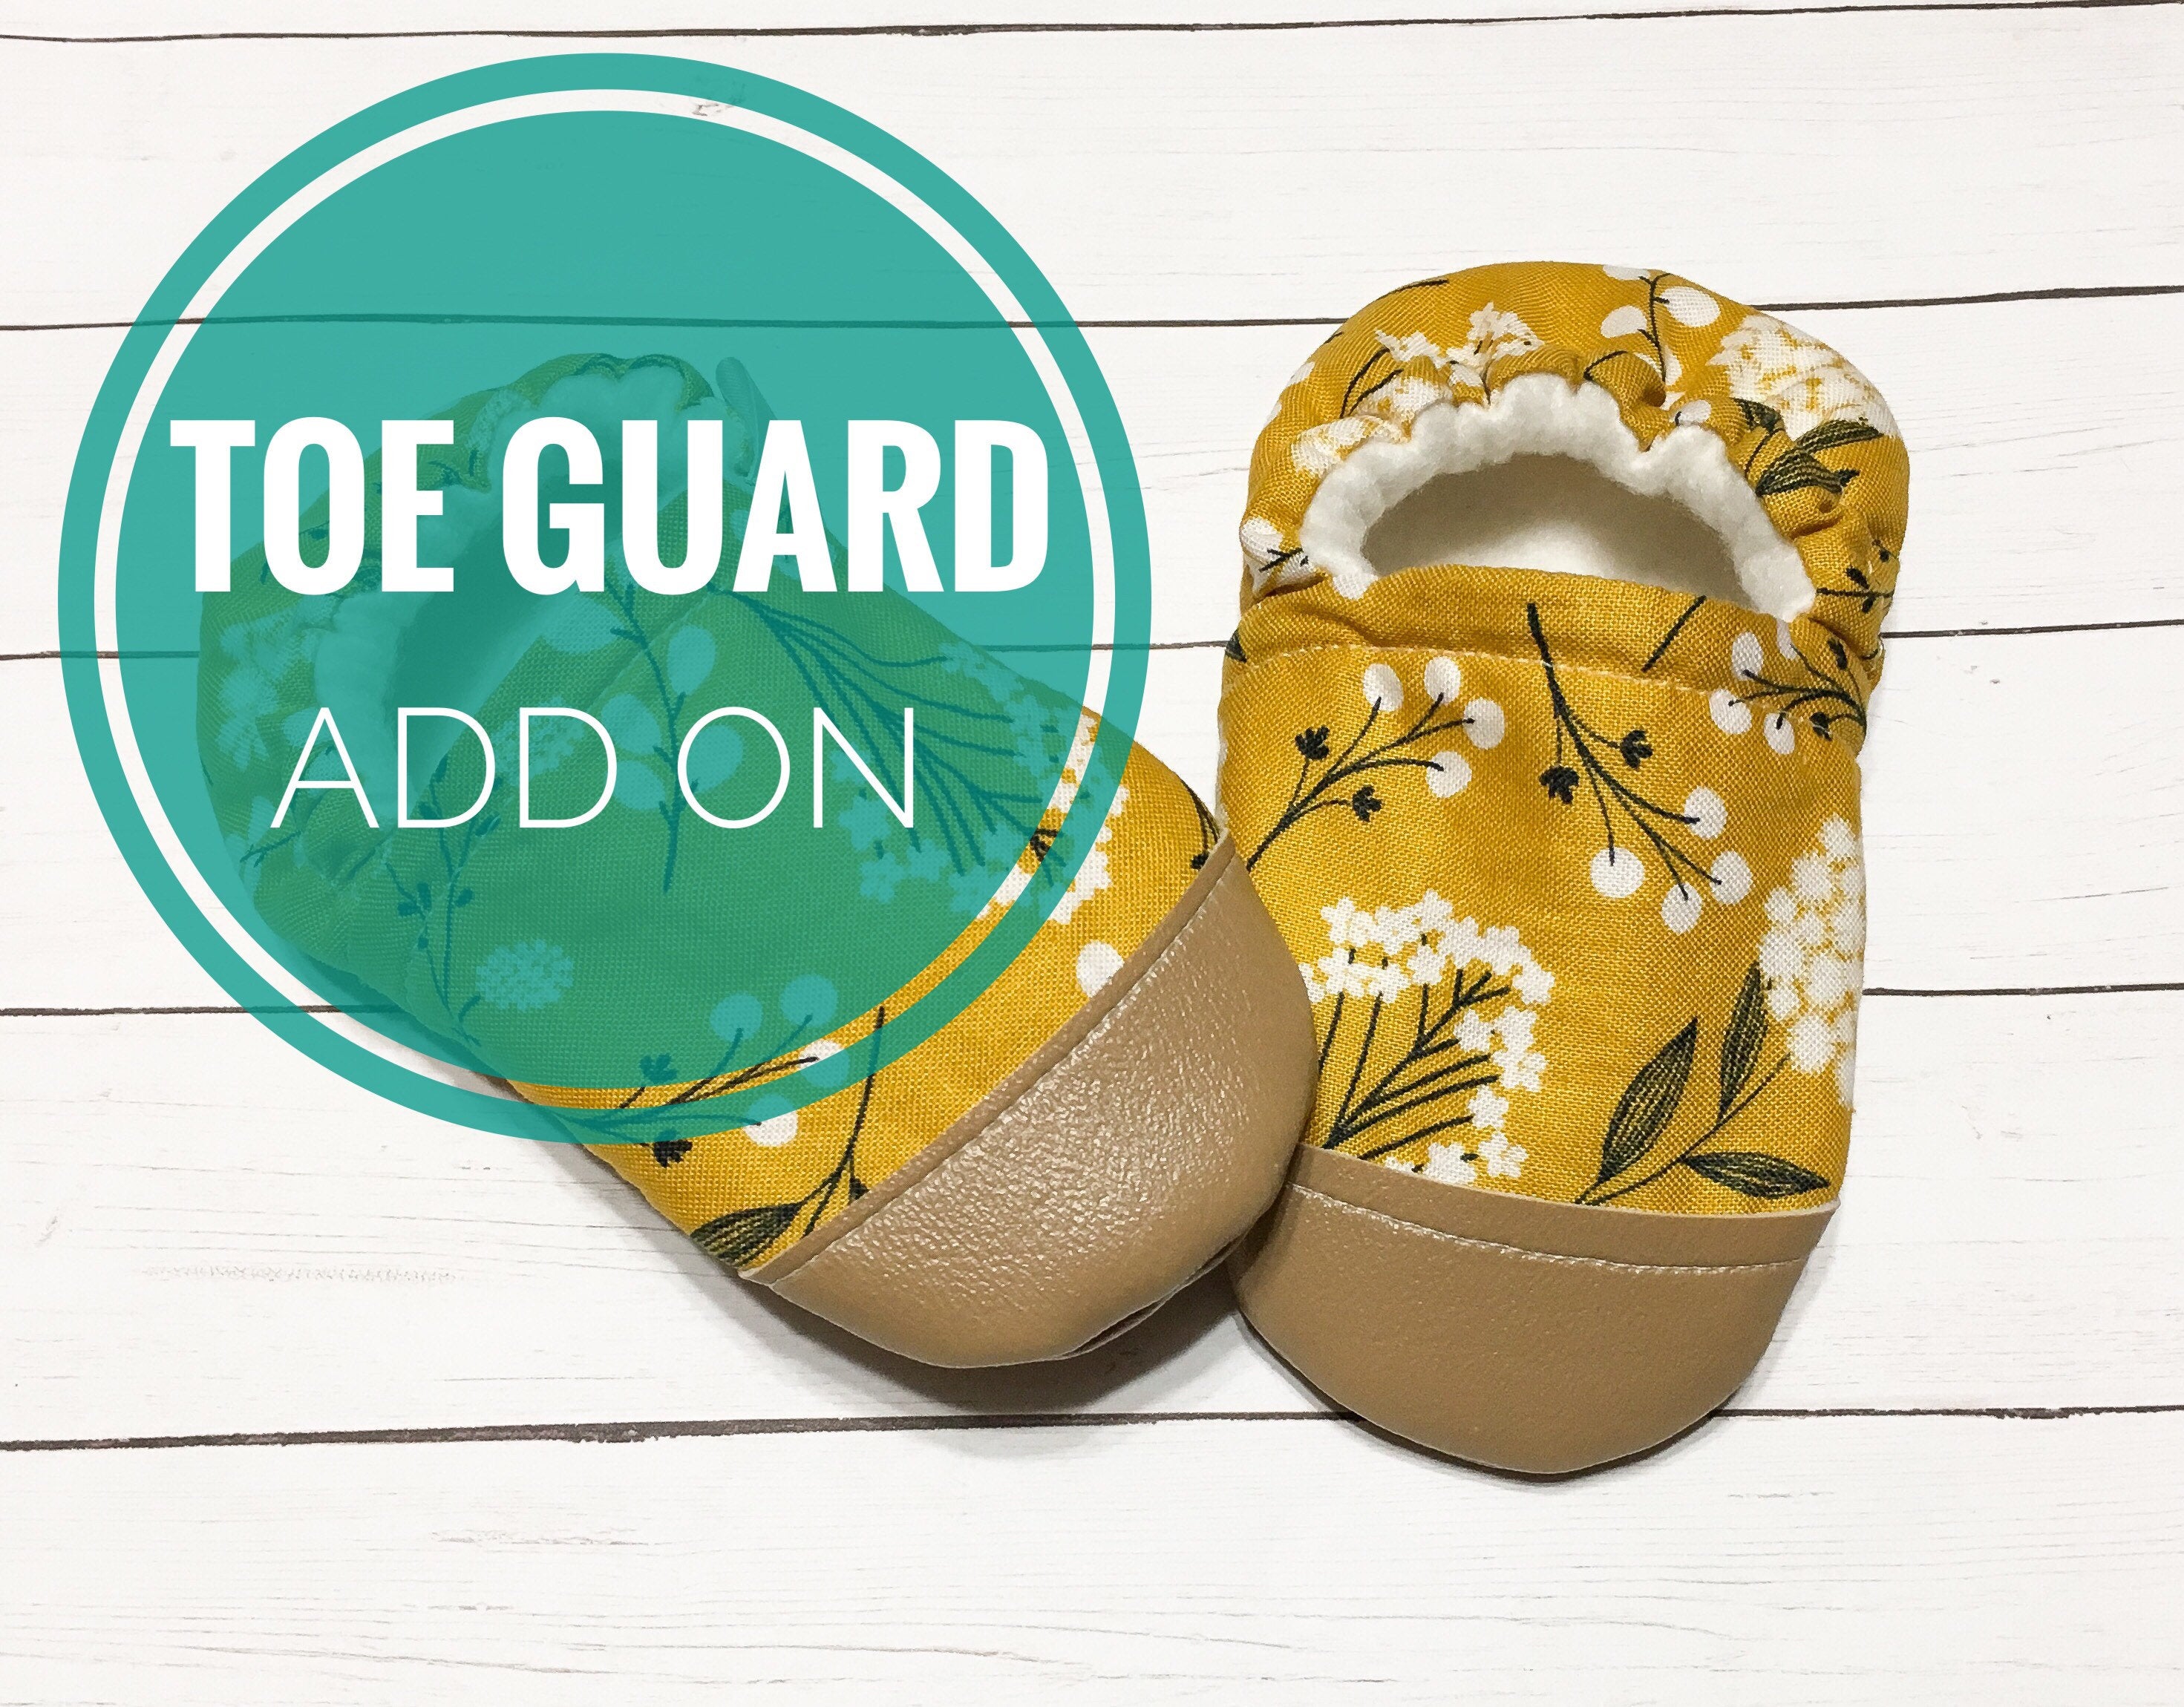 Toe Guard / ADD ON